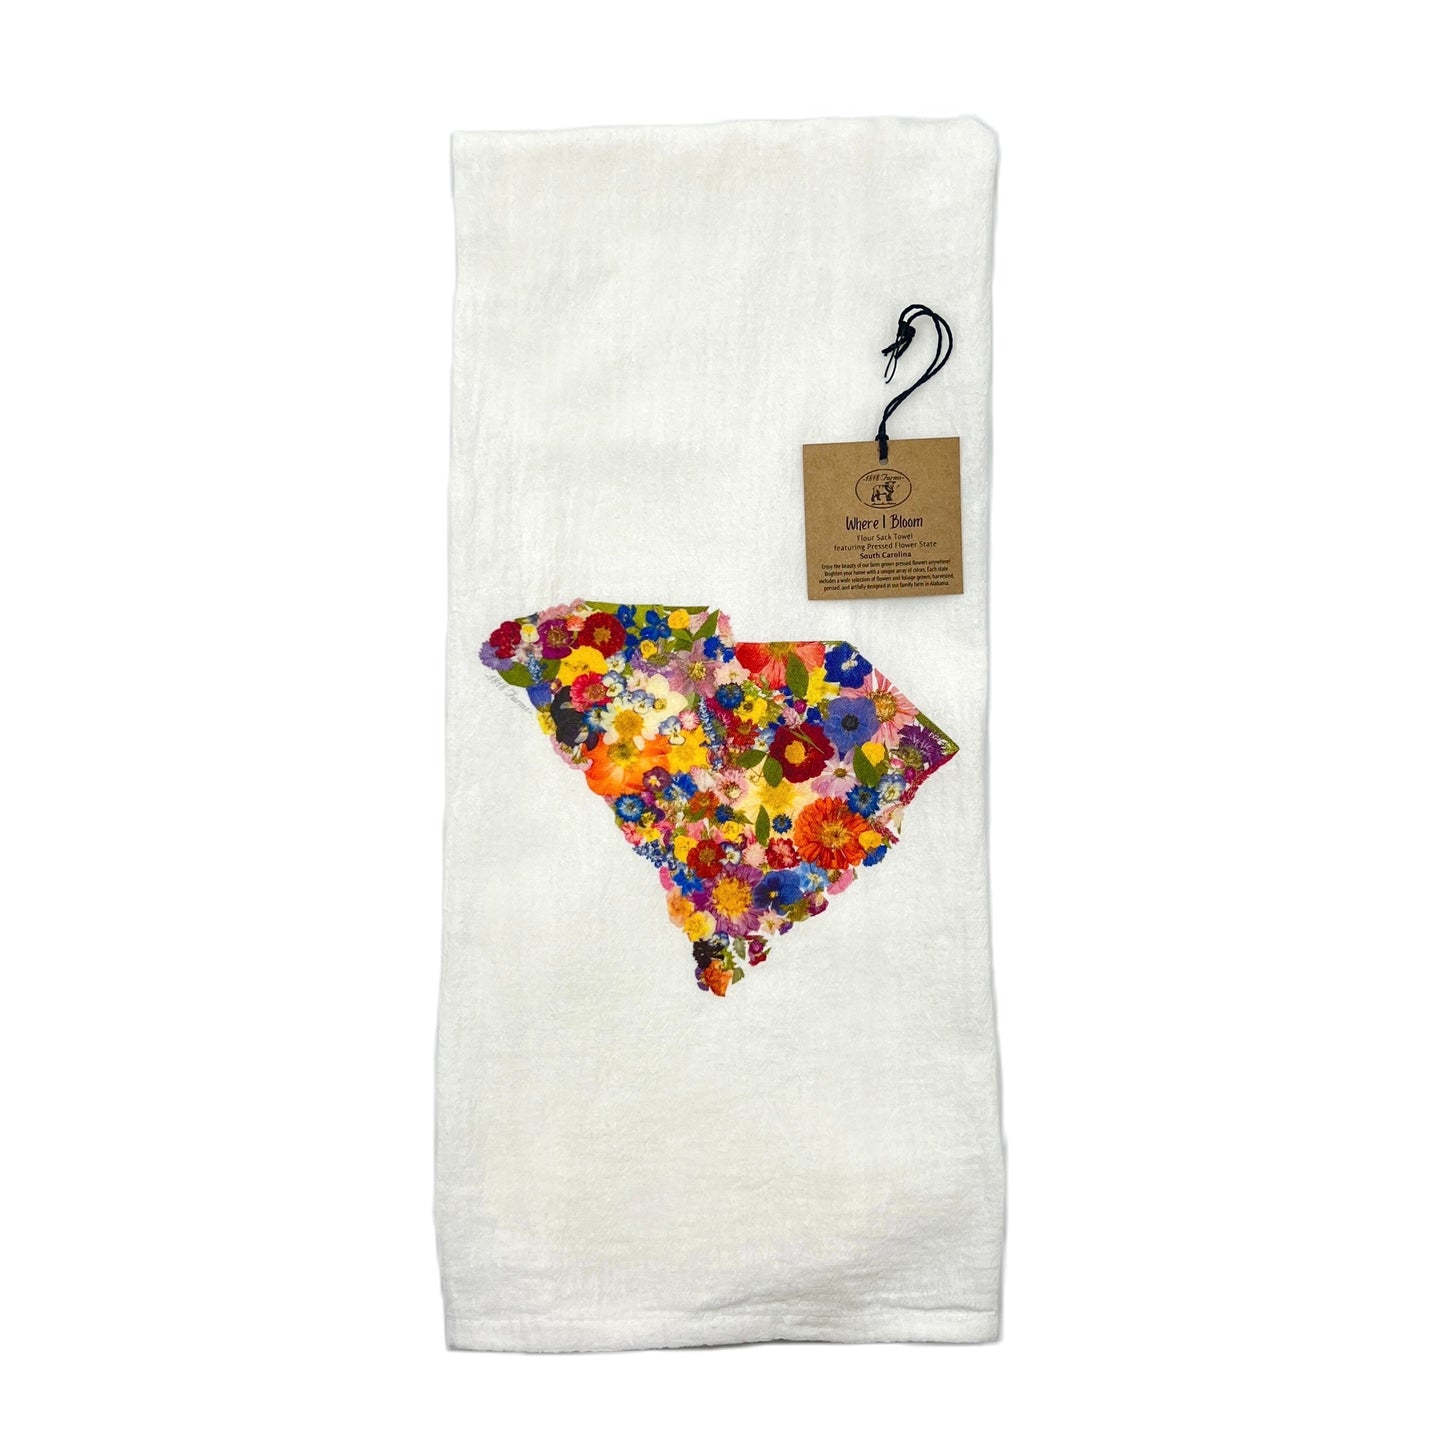 State Themed Flour Sack Towel  - "Where I Bloom" Collection Towel 1818 Farms South Carolina  